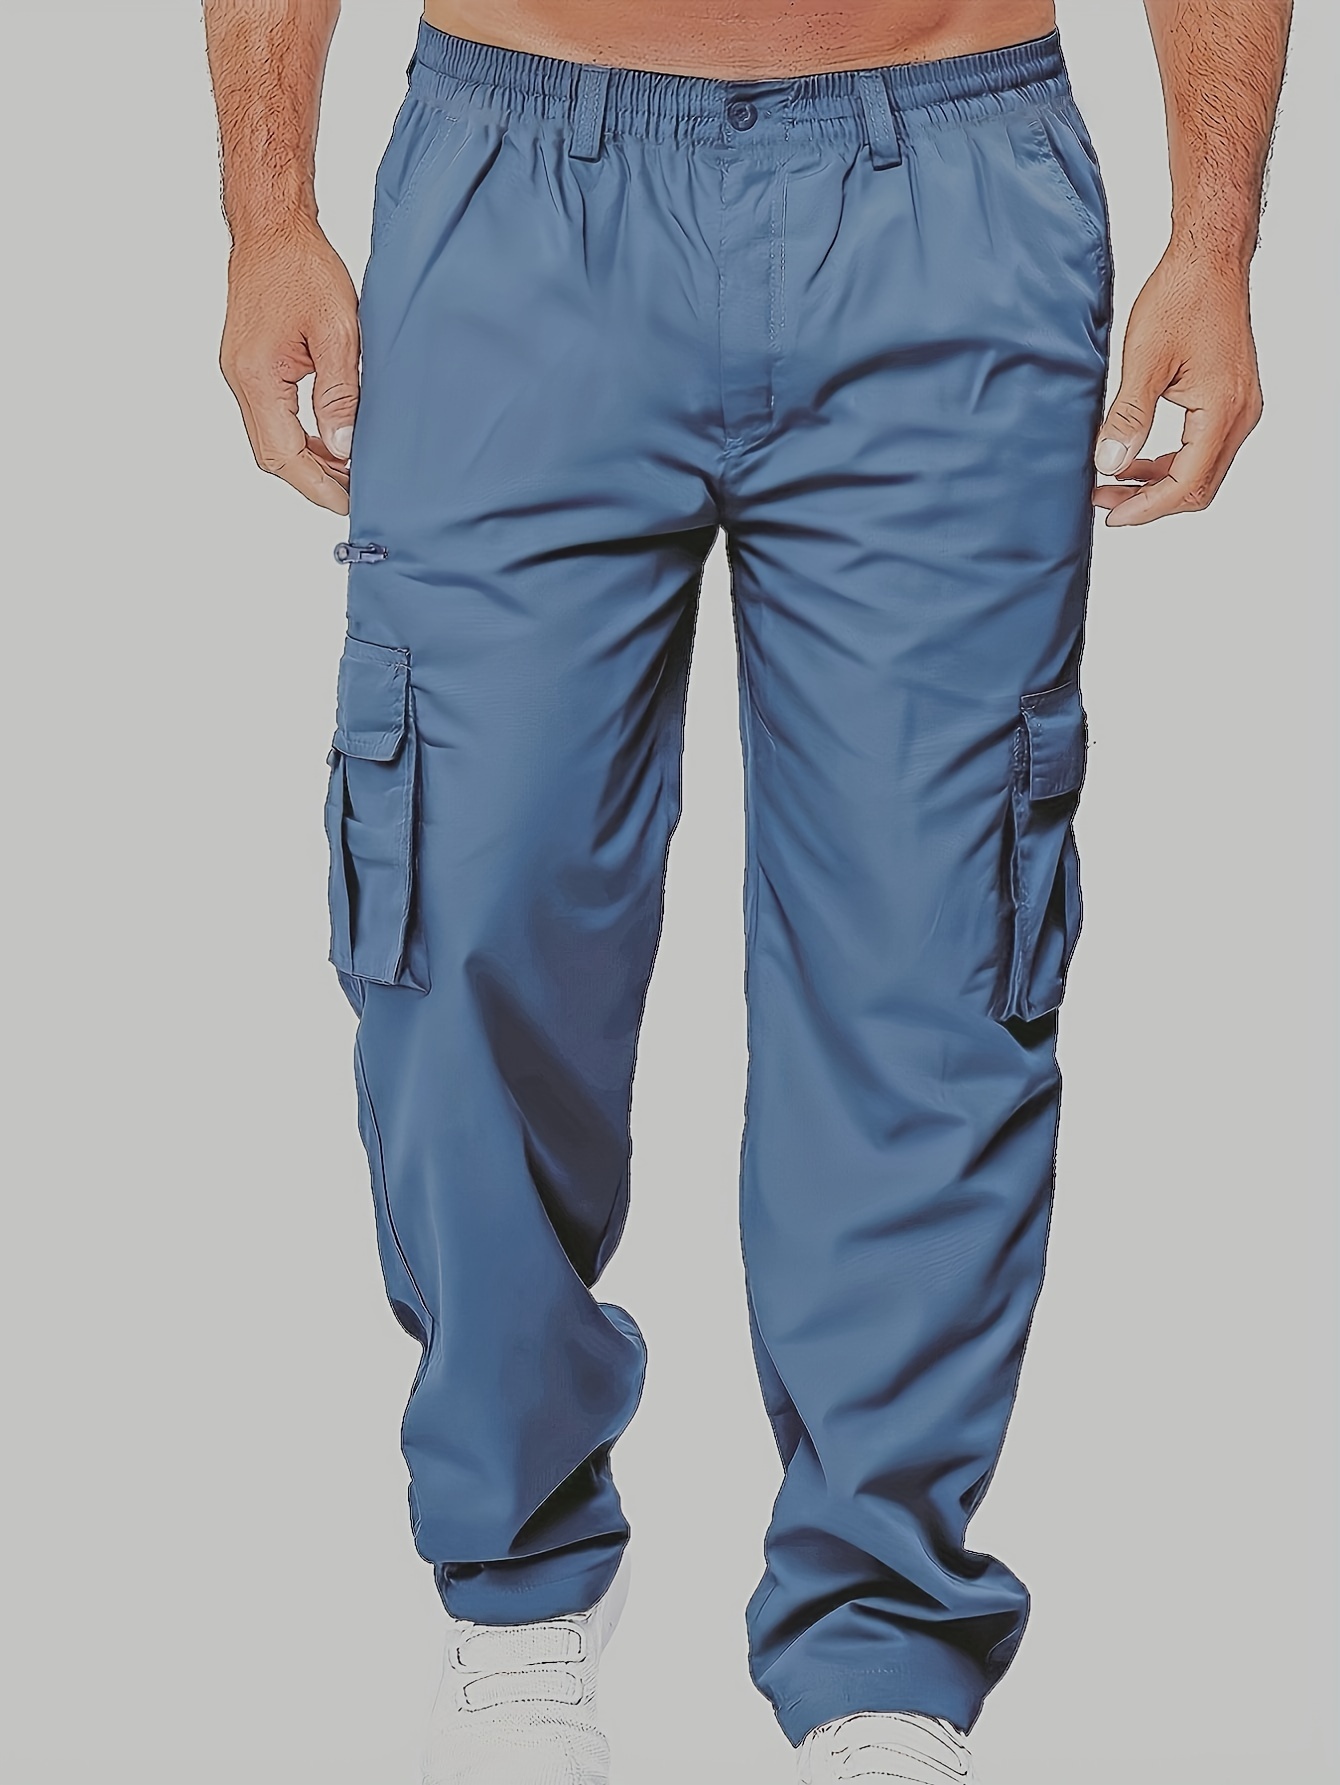 Stretch Cargo Pants for Women Solid Elastic Waist Denim Work Pants Multi  Pockets Comfy Streetwear Jogger Pants Loose Pants(L,Army Green)